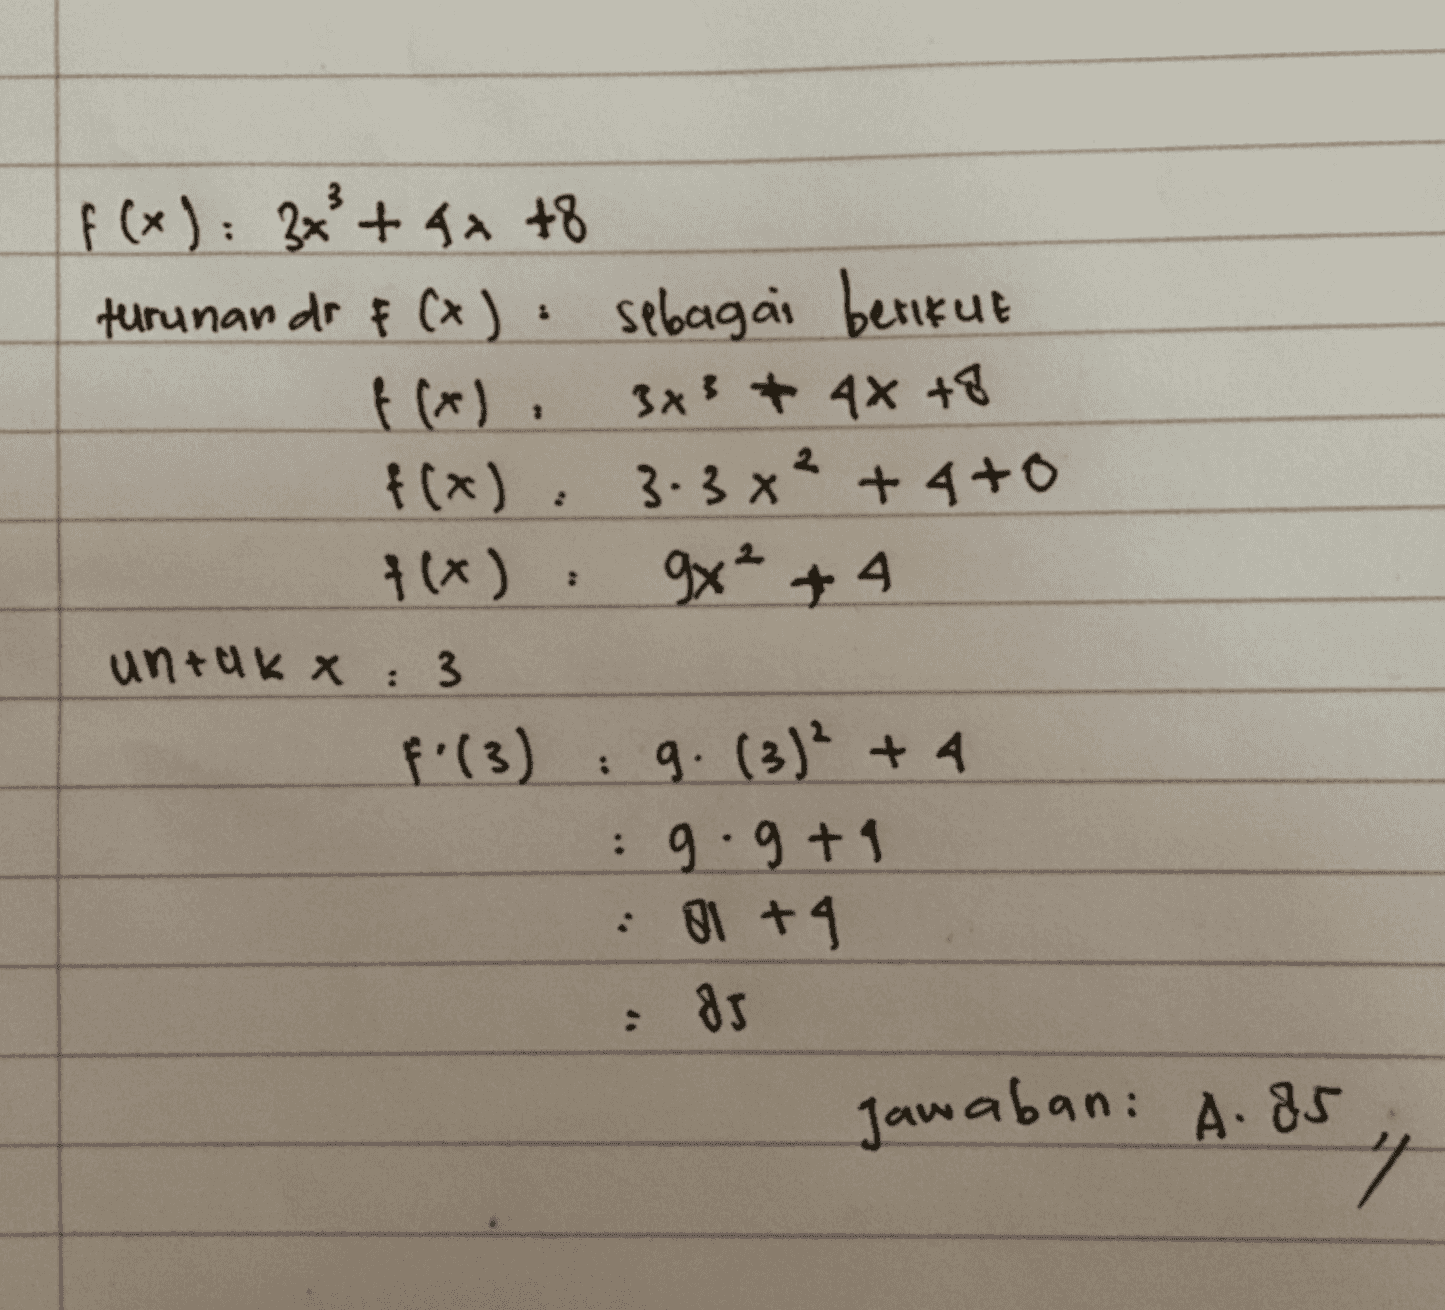 : 2 f(x) f(x): 3x² + 4x +8 turunan do f (x) sebagai berikut t(*) 3x3 & 4x +8 f(x) 3.3x² + 4to 9x² + 4 untuk X 3 f!(3) : 9. (3) + 4 9.g+1 81 +4 : 85 Jawaban: A. 95 : 7 